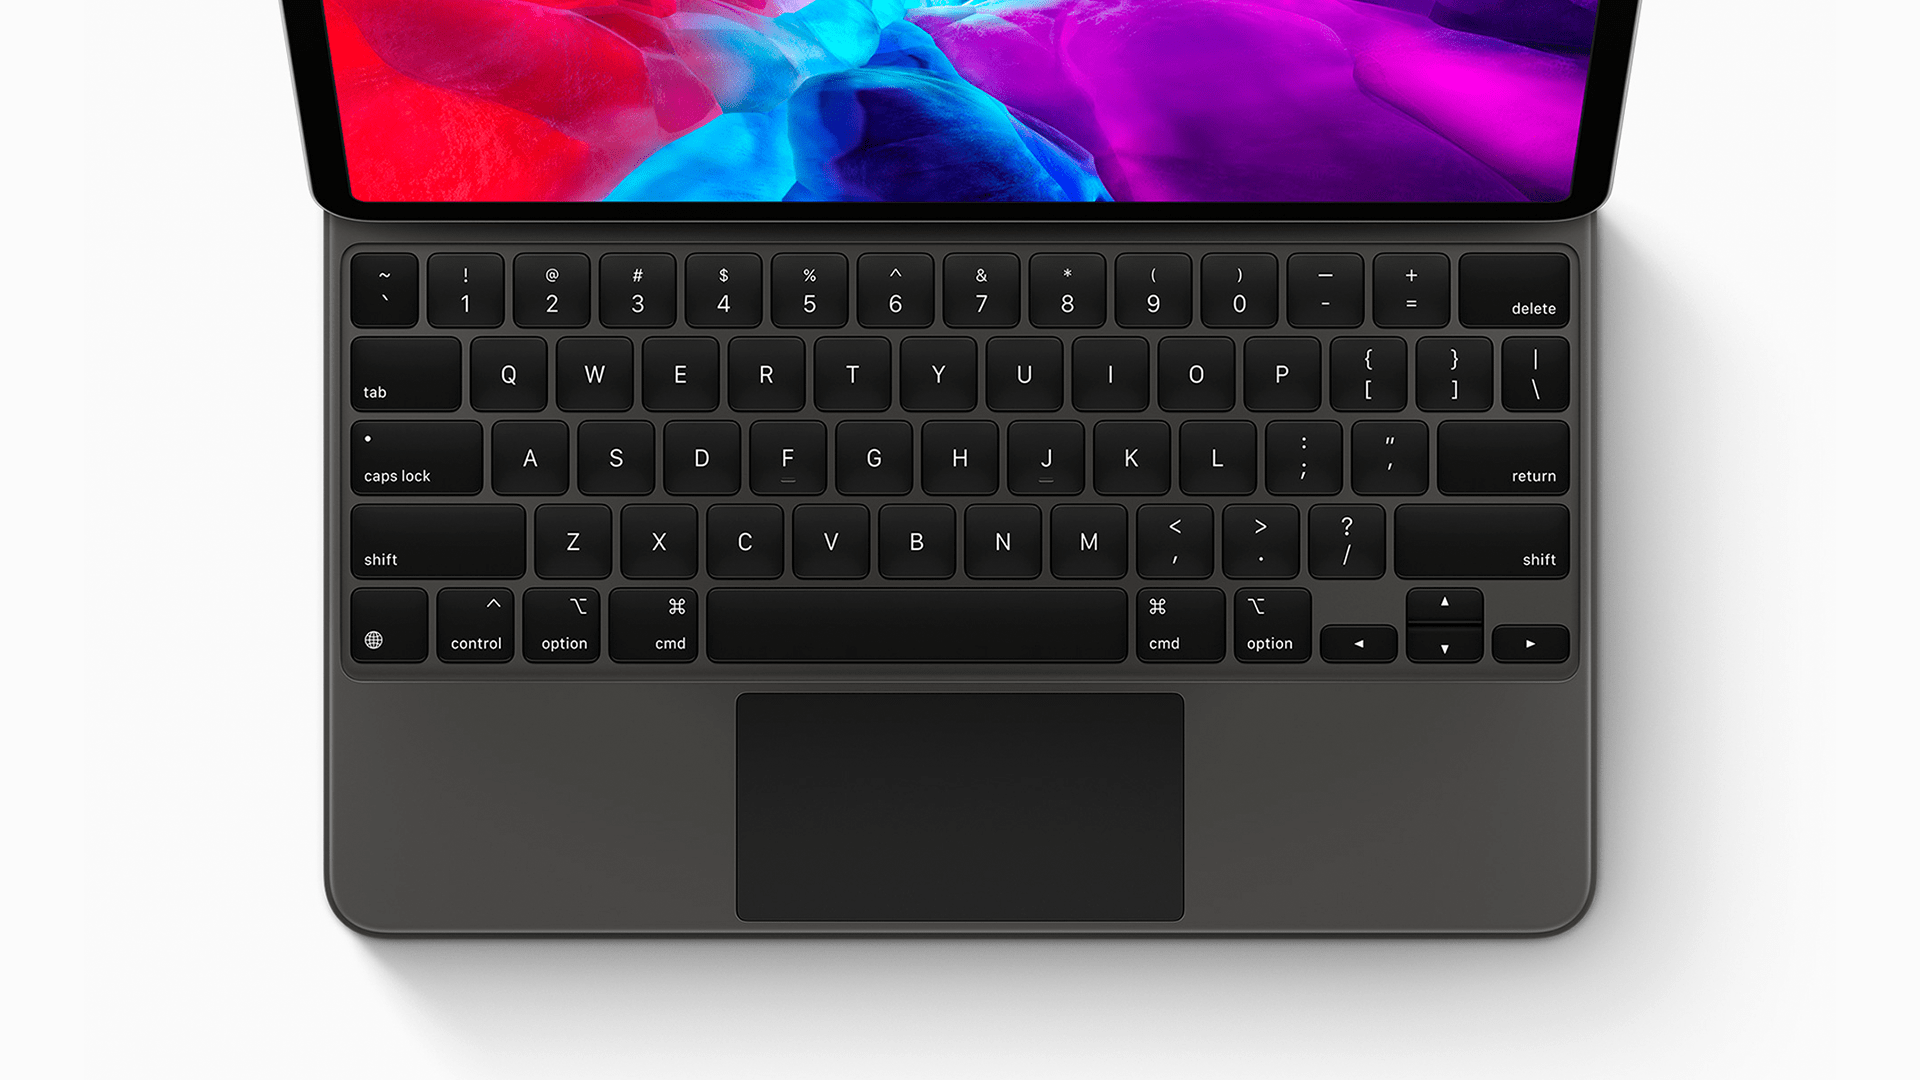 MacBook Pro cursor – Custom Cursor